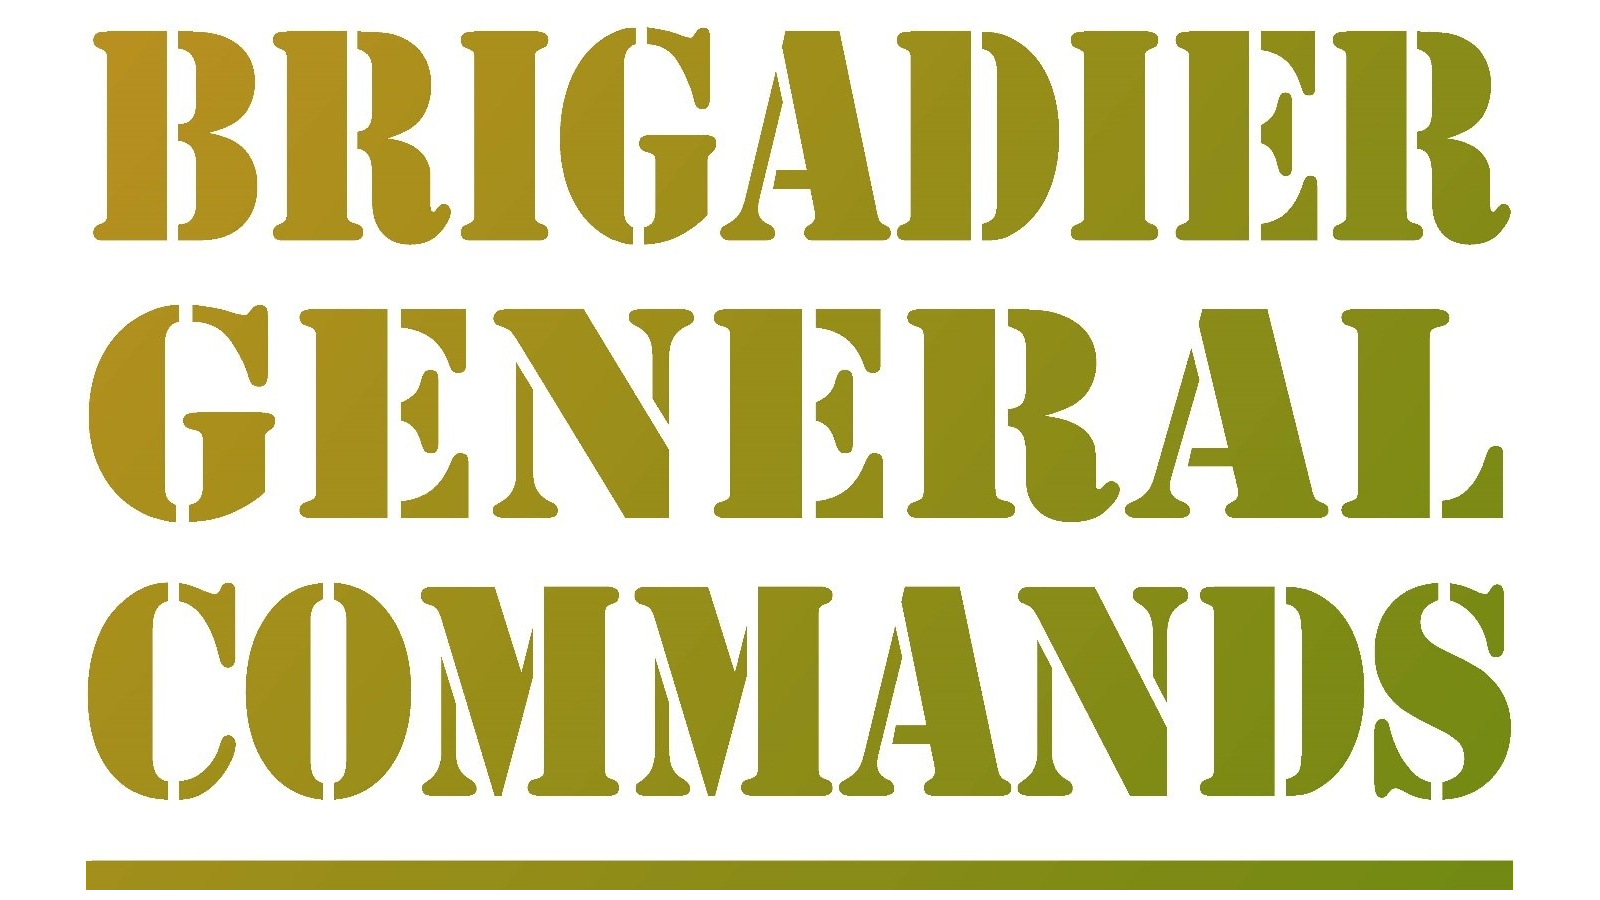 Brigadier General Commands